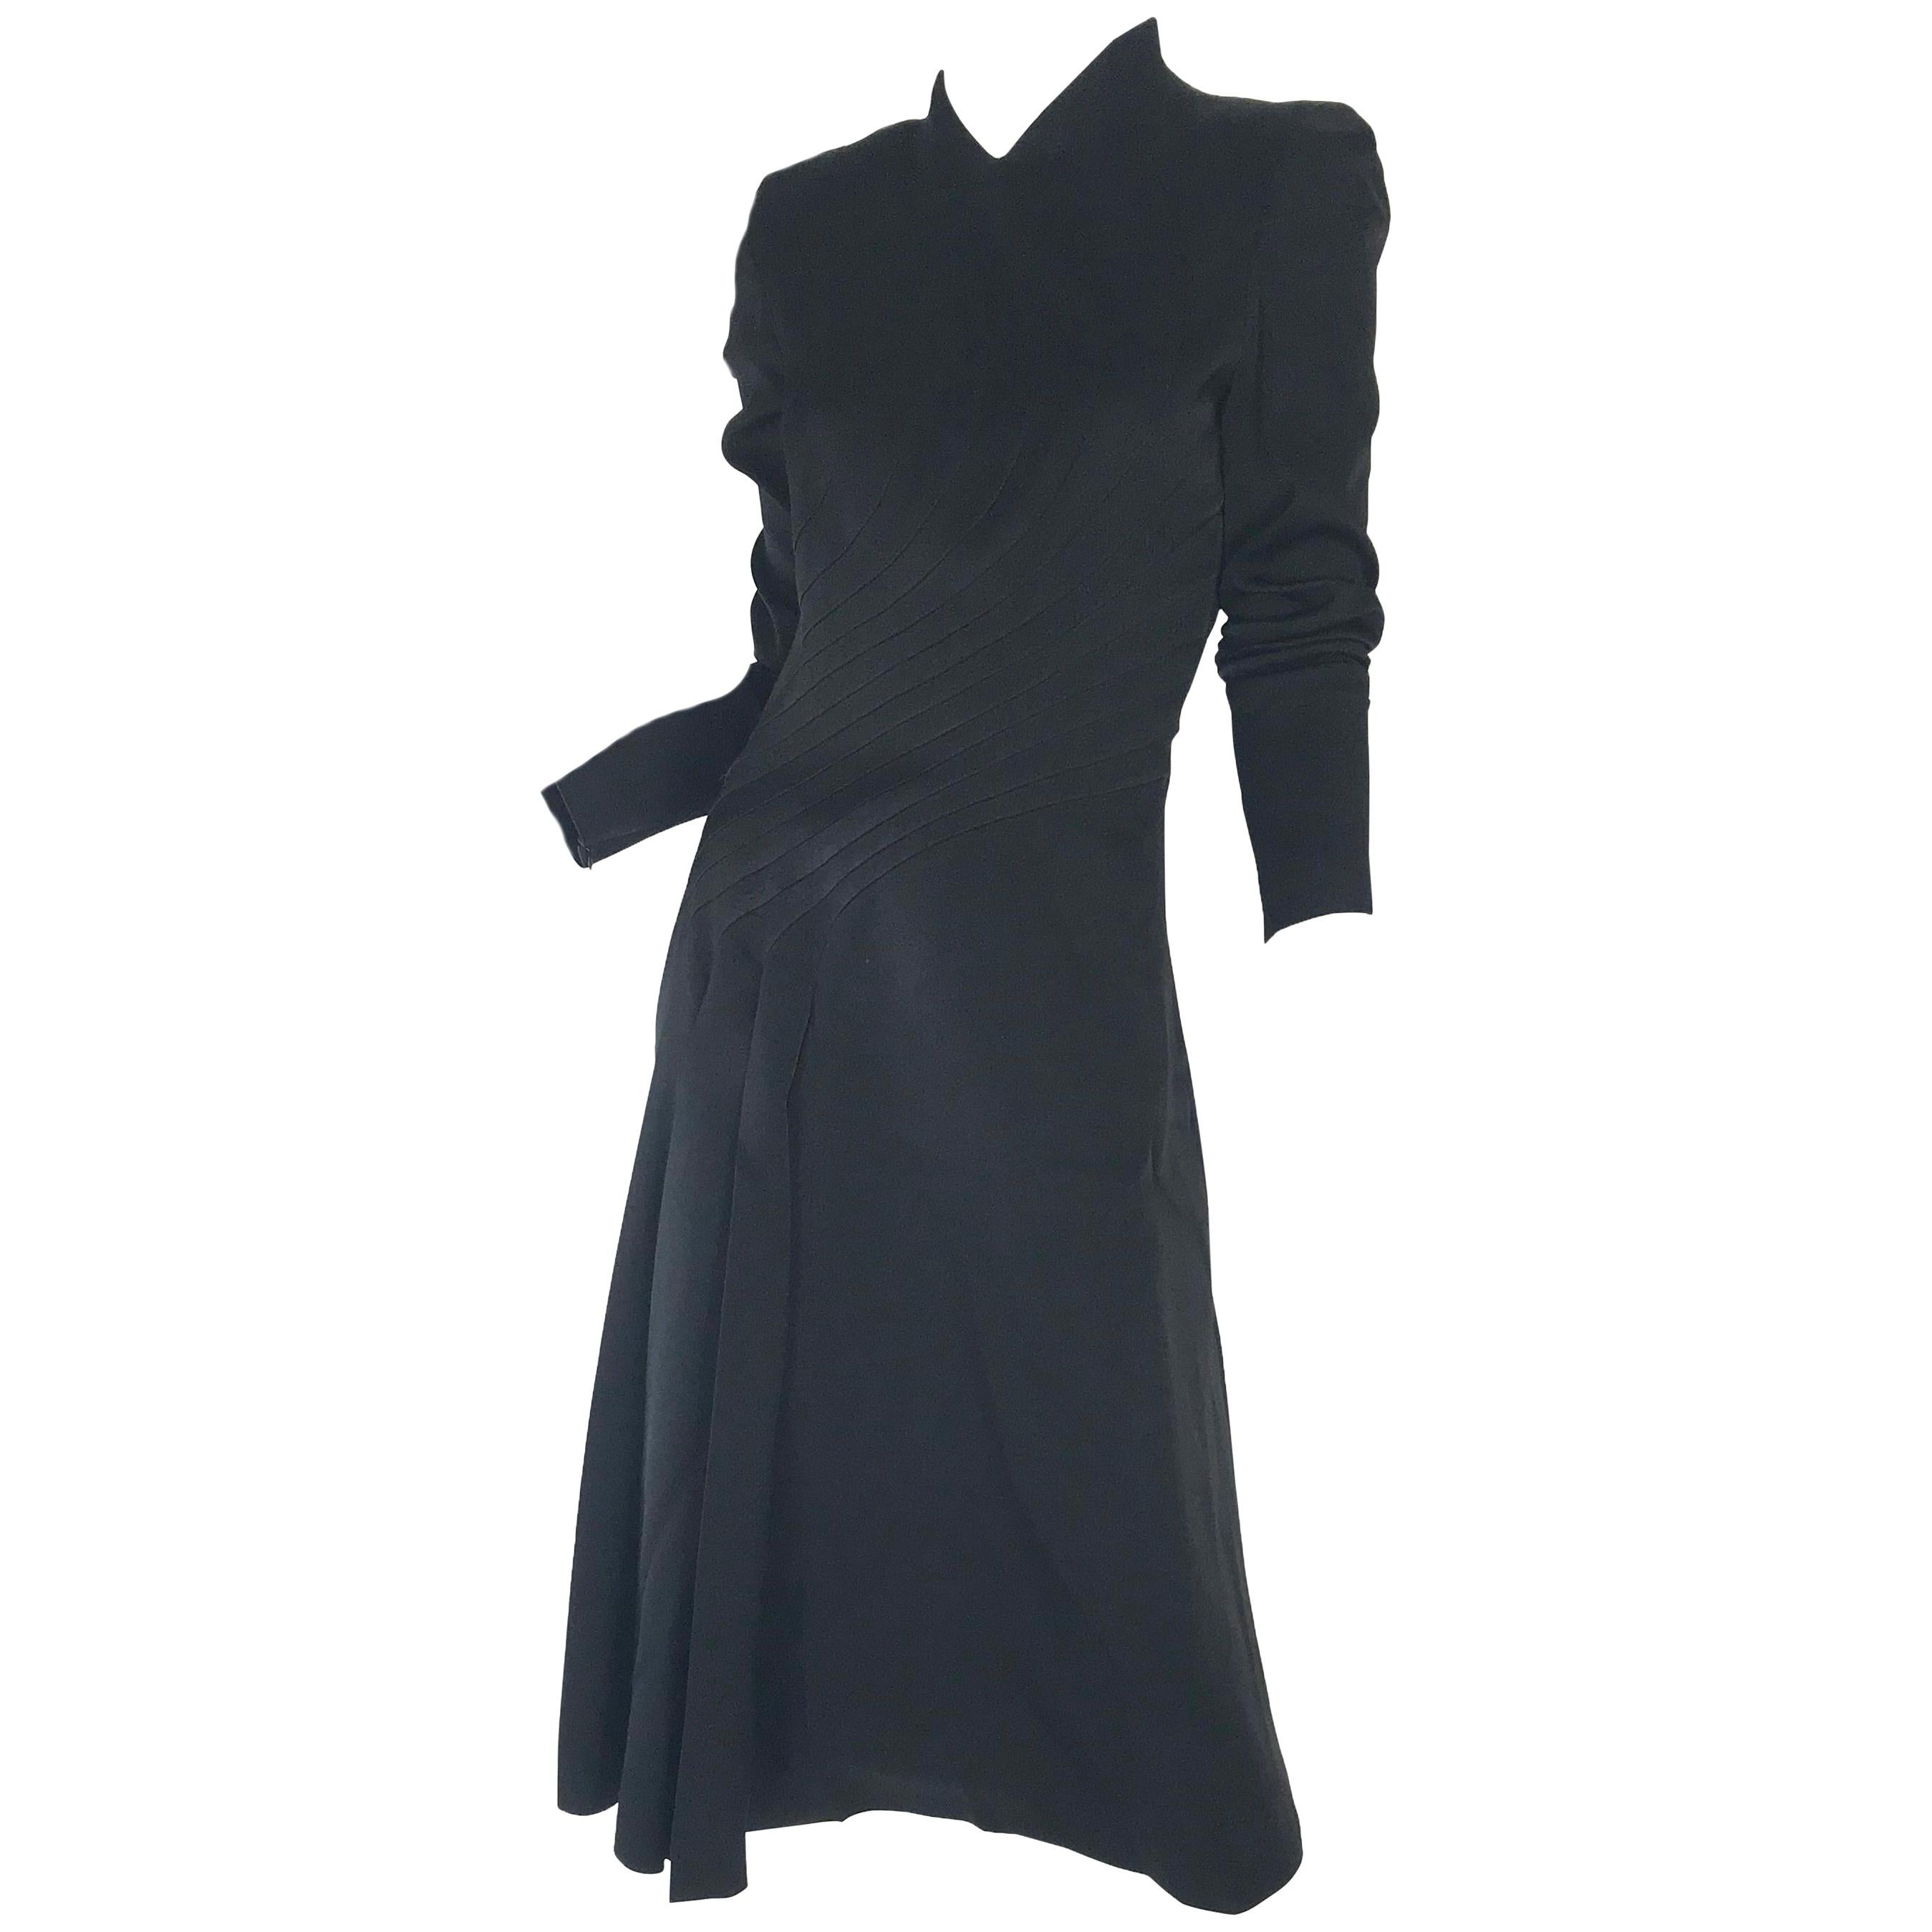 1990s black John Galliano dress with diagonal seams